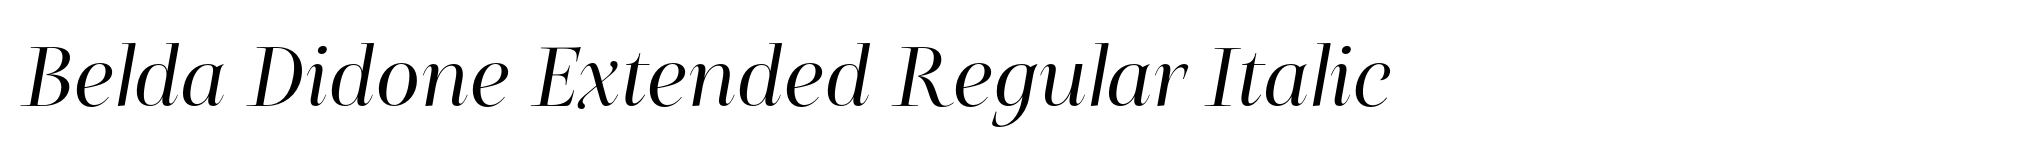 Belda Didone Extended Regular Italic image